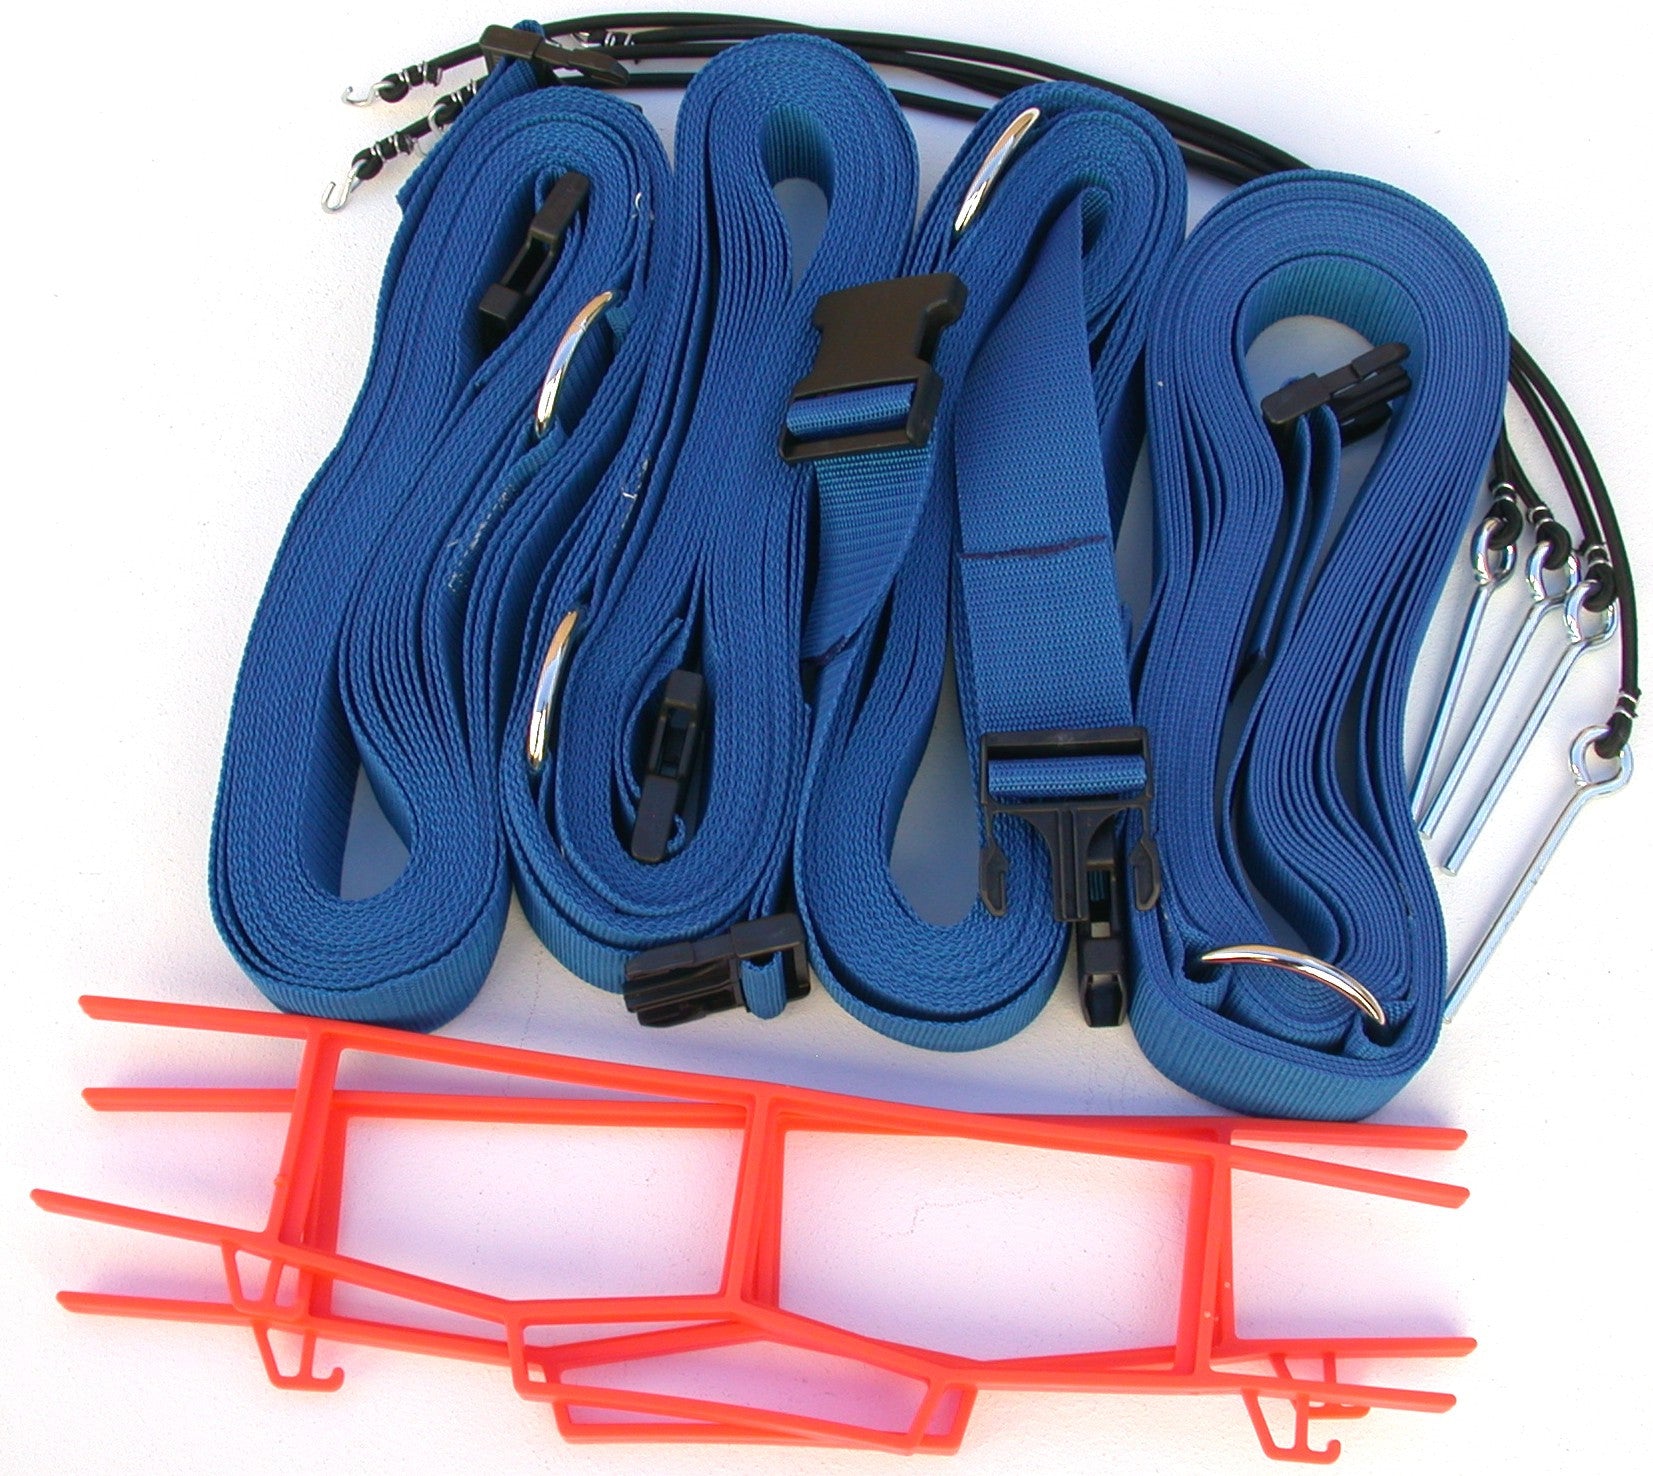 19ABUG-blue 2-inch adjustable web boundary, grass pegs, storage winders